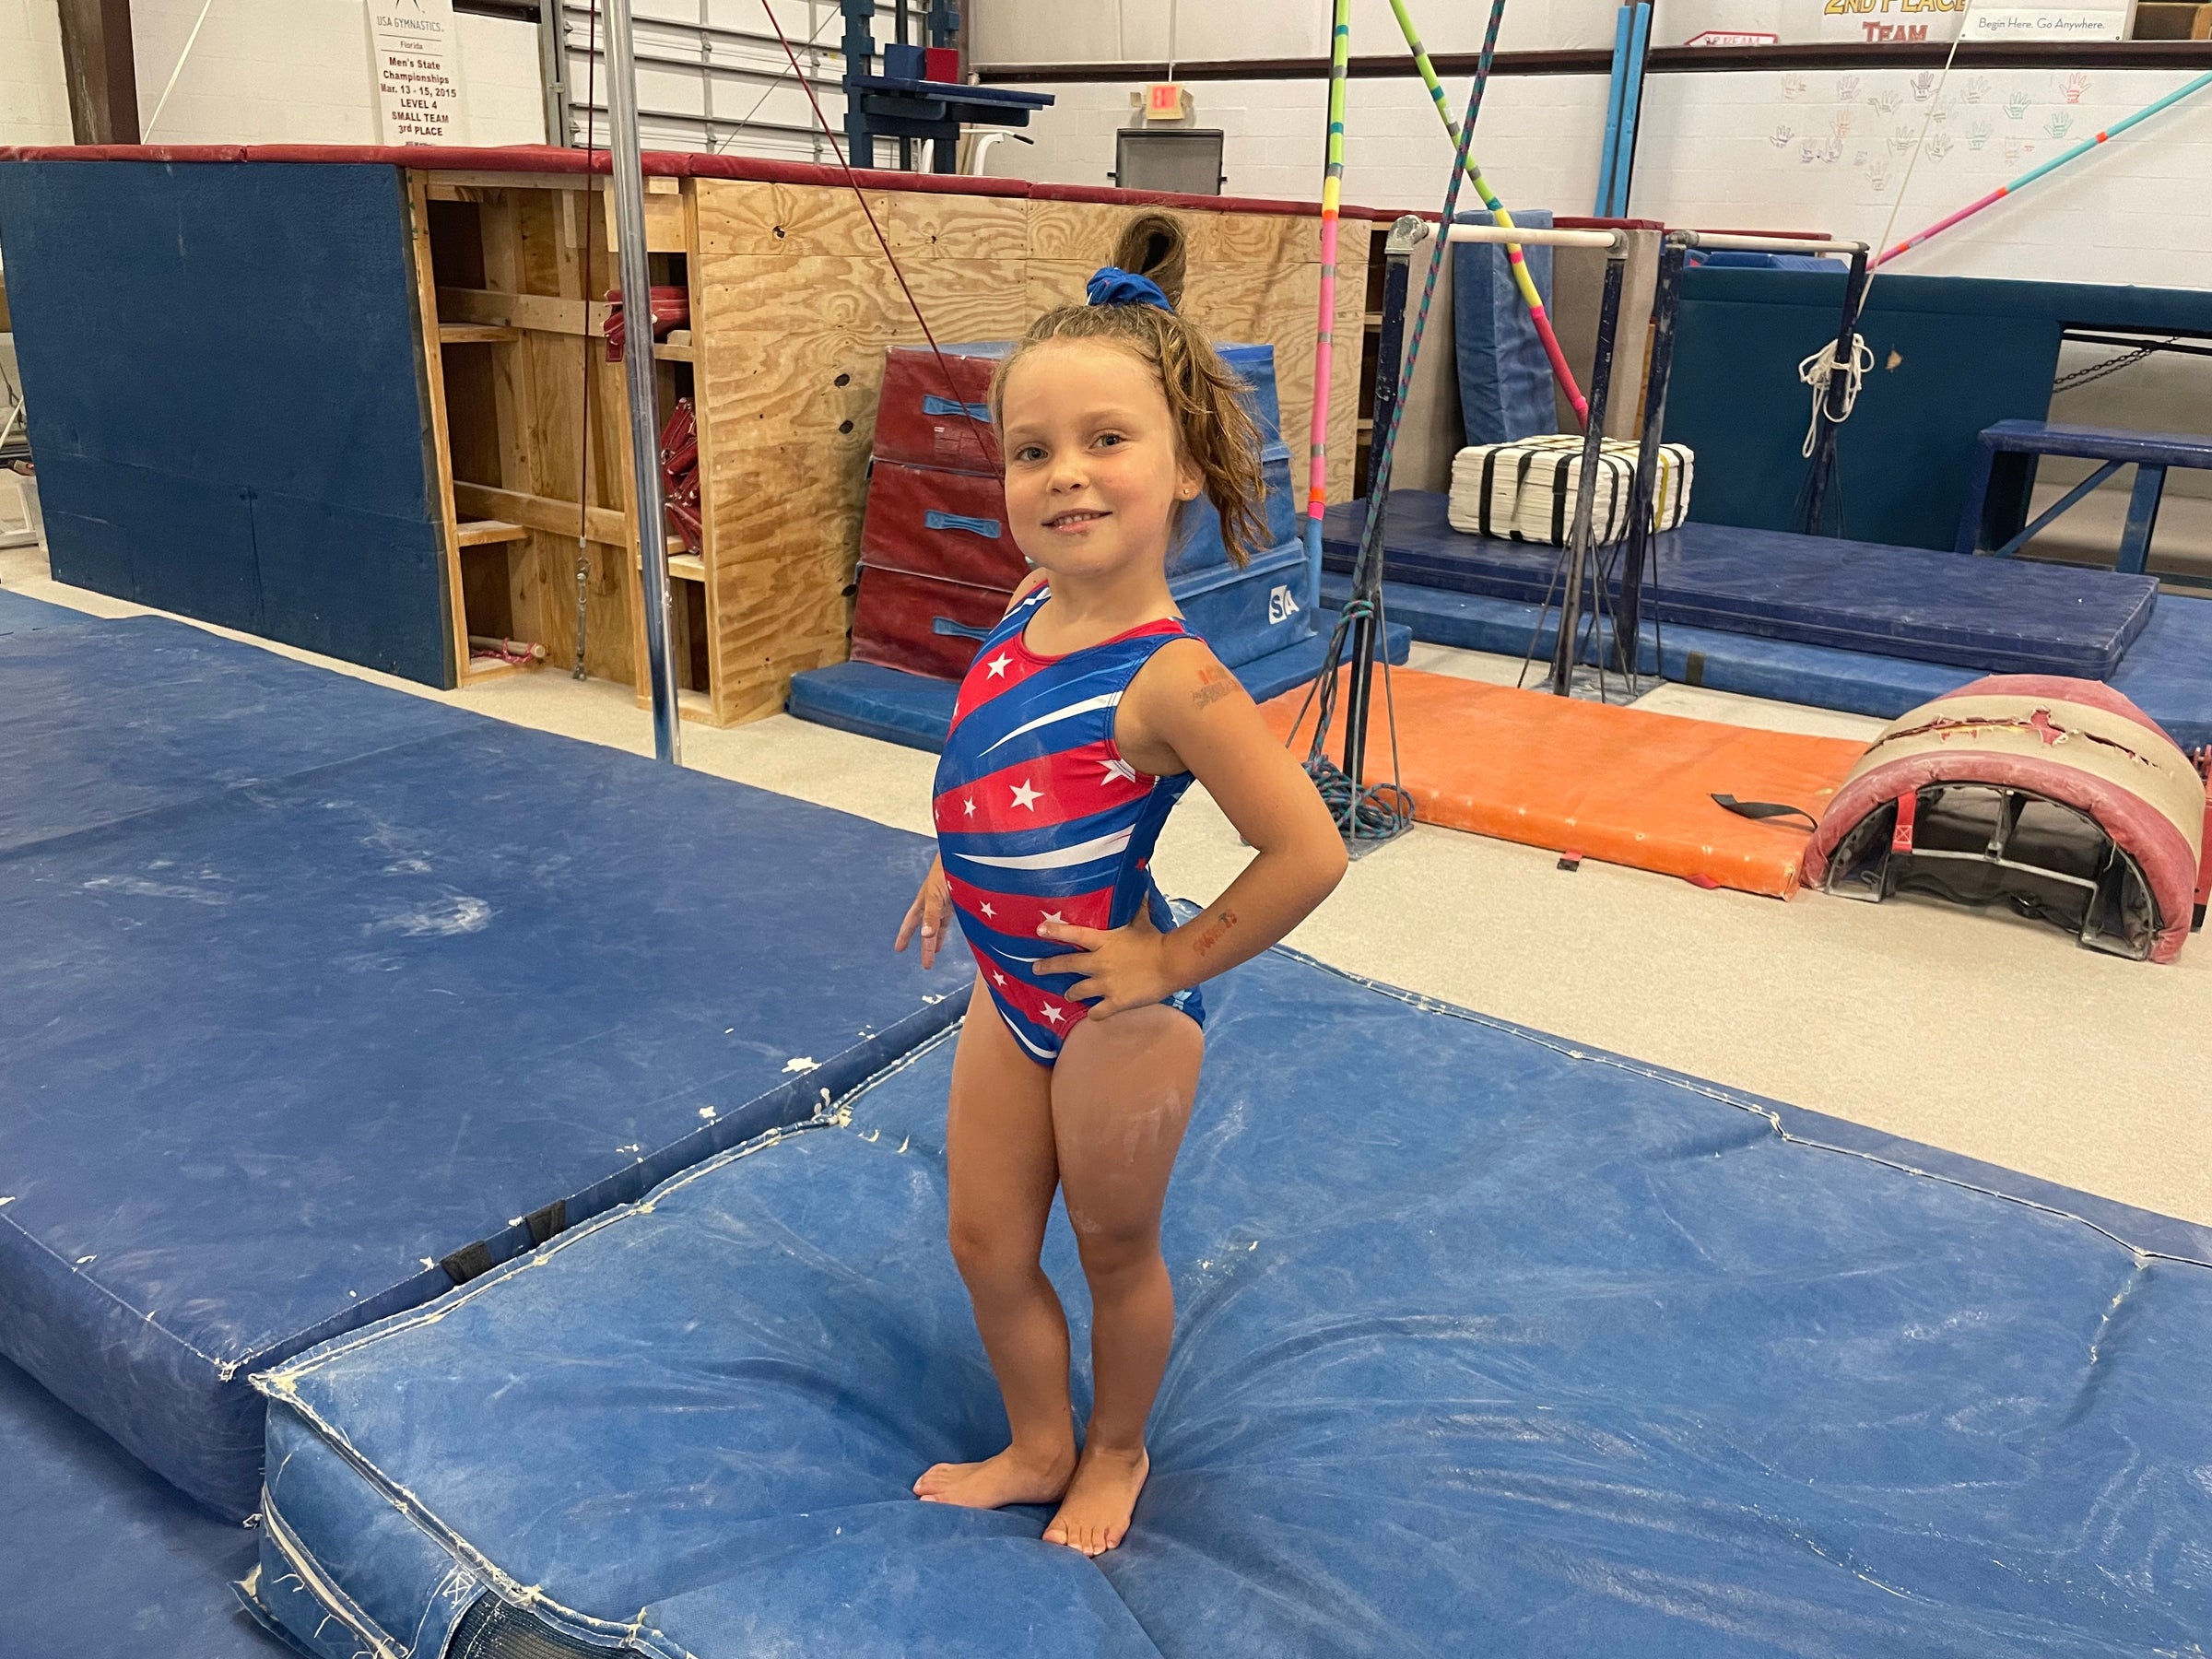 Girl Gymnastics Leotard Sparkling Gymnastics Suit Long Sleeve Dress  Bodysuit 8